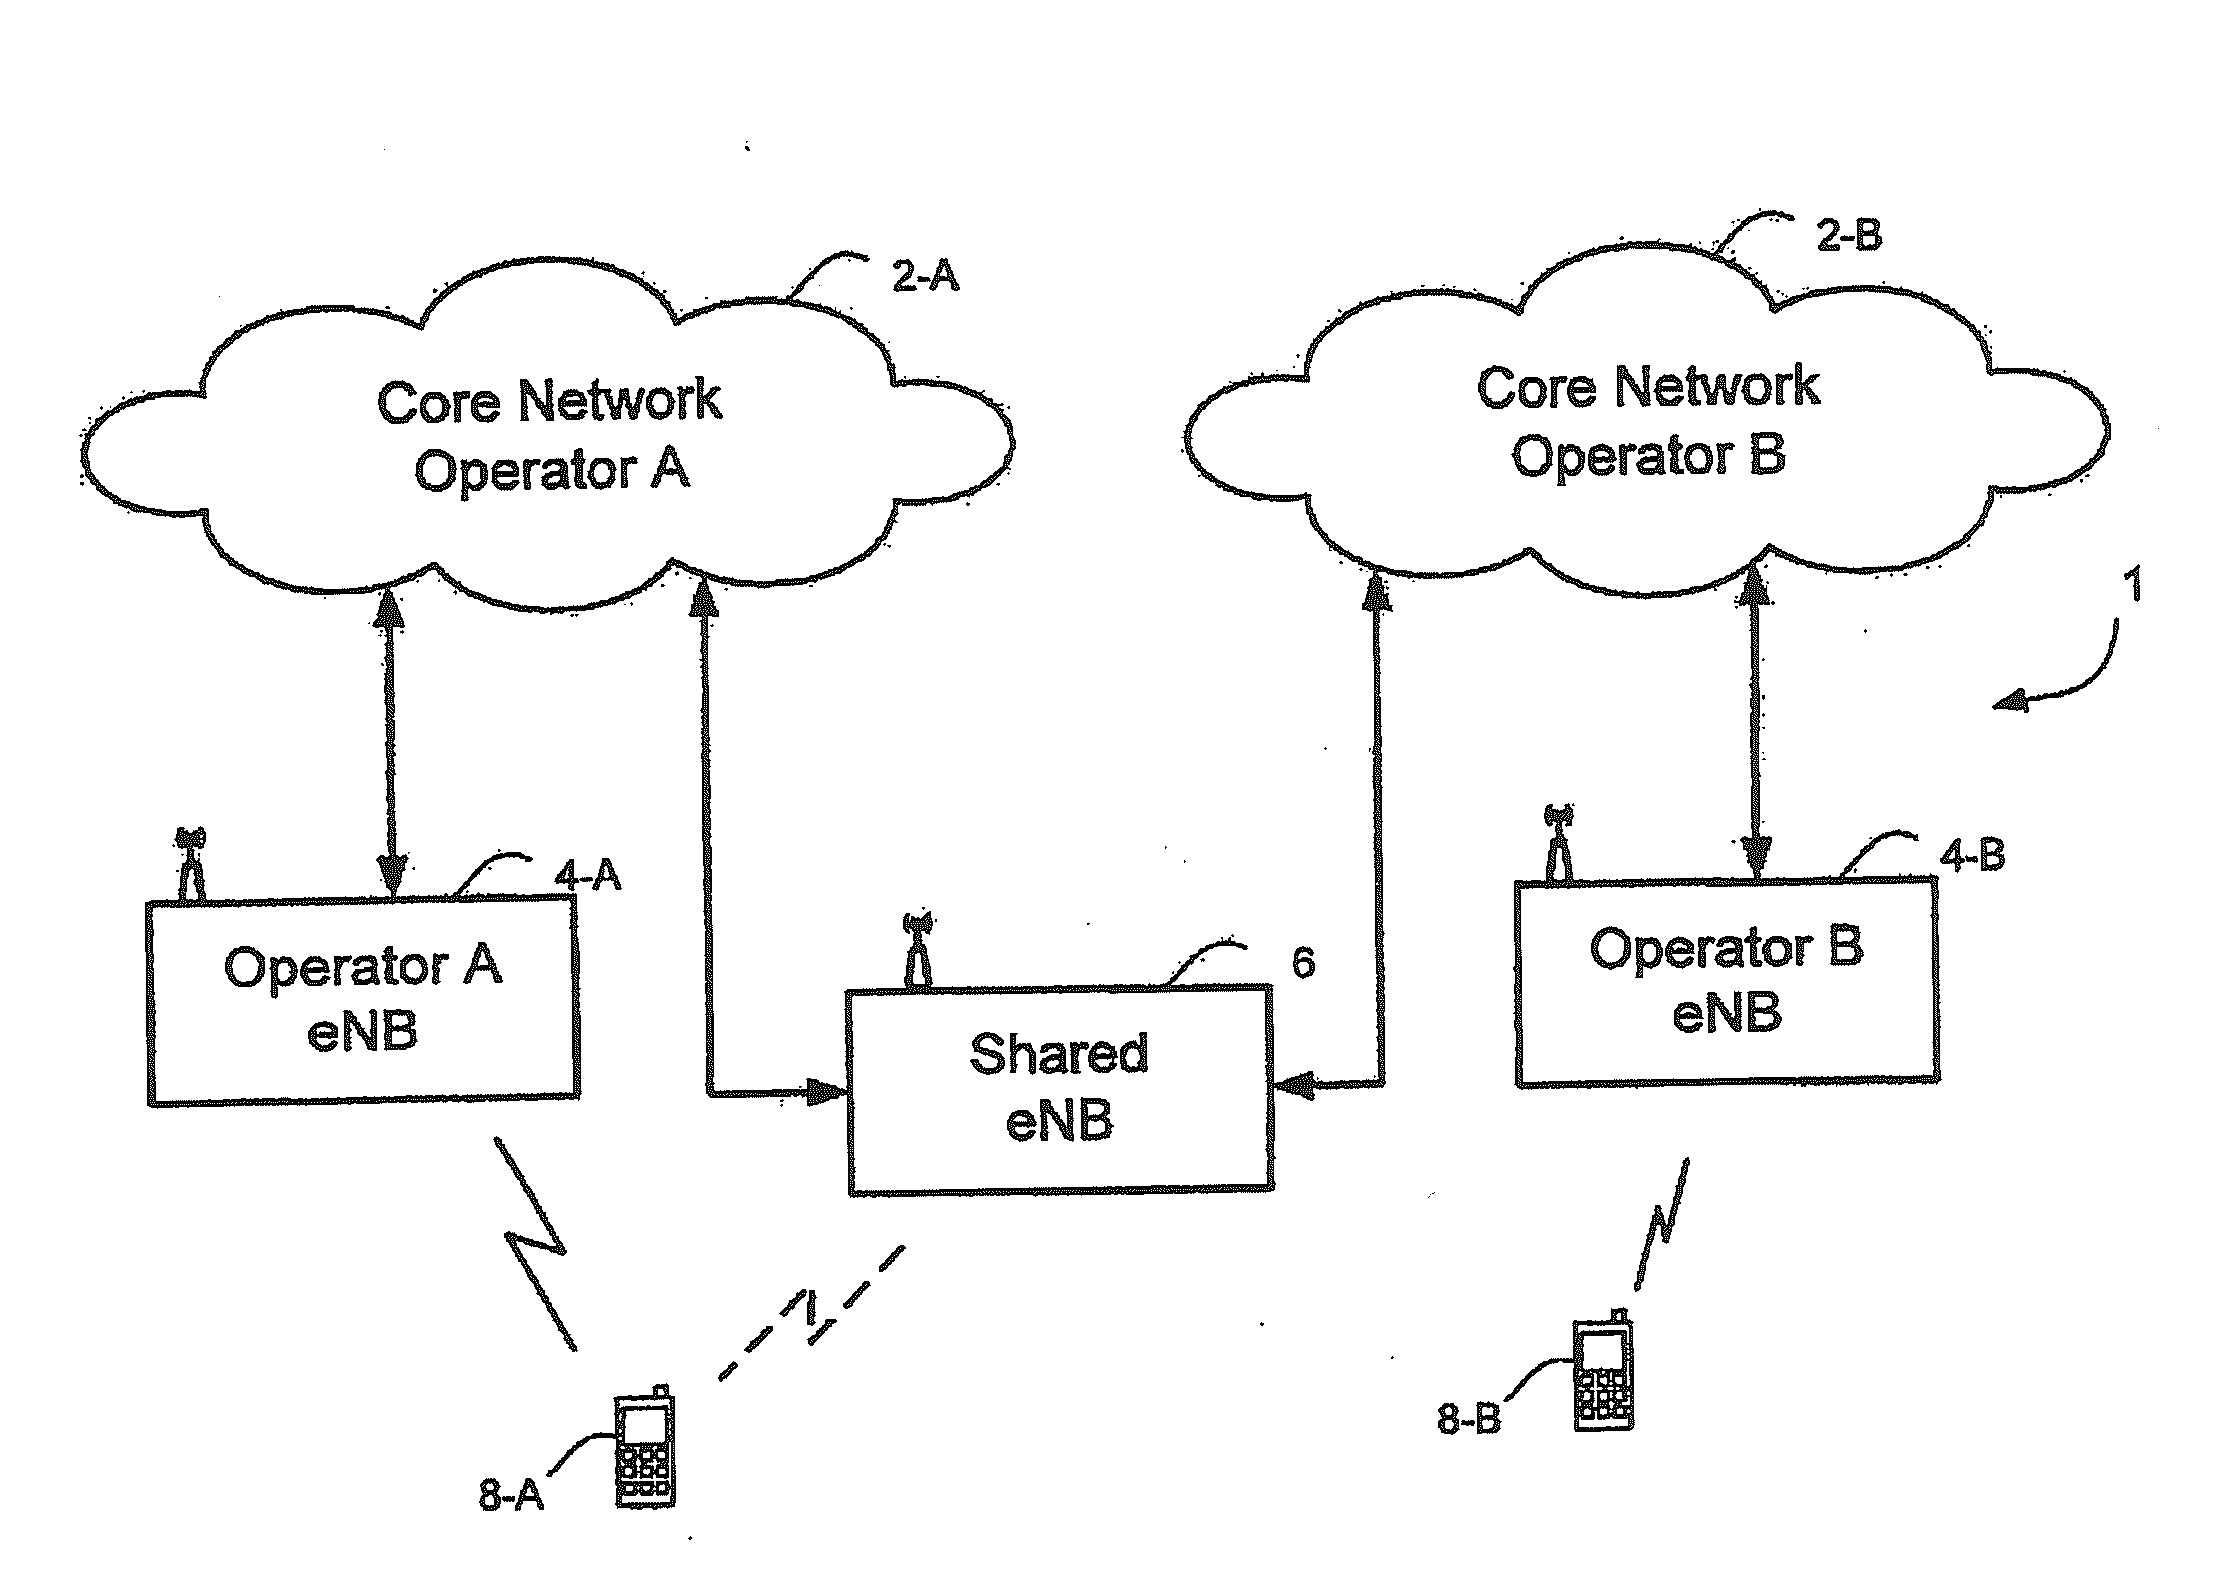 Network sharing